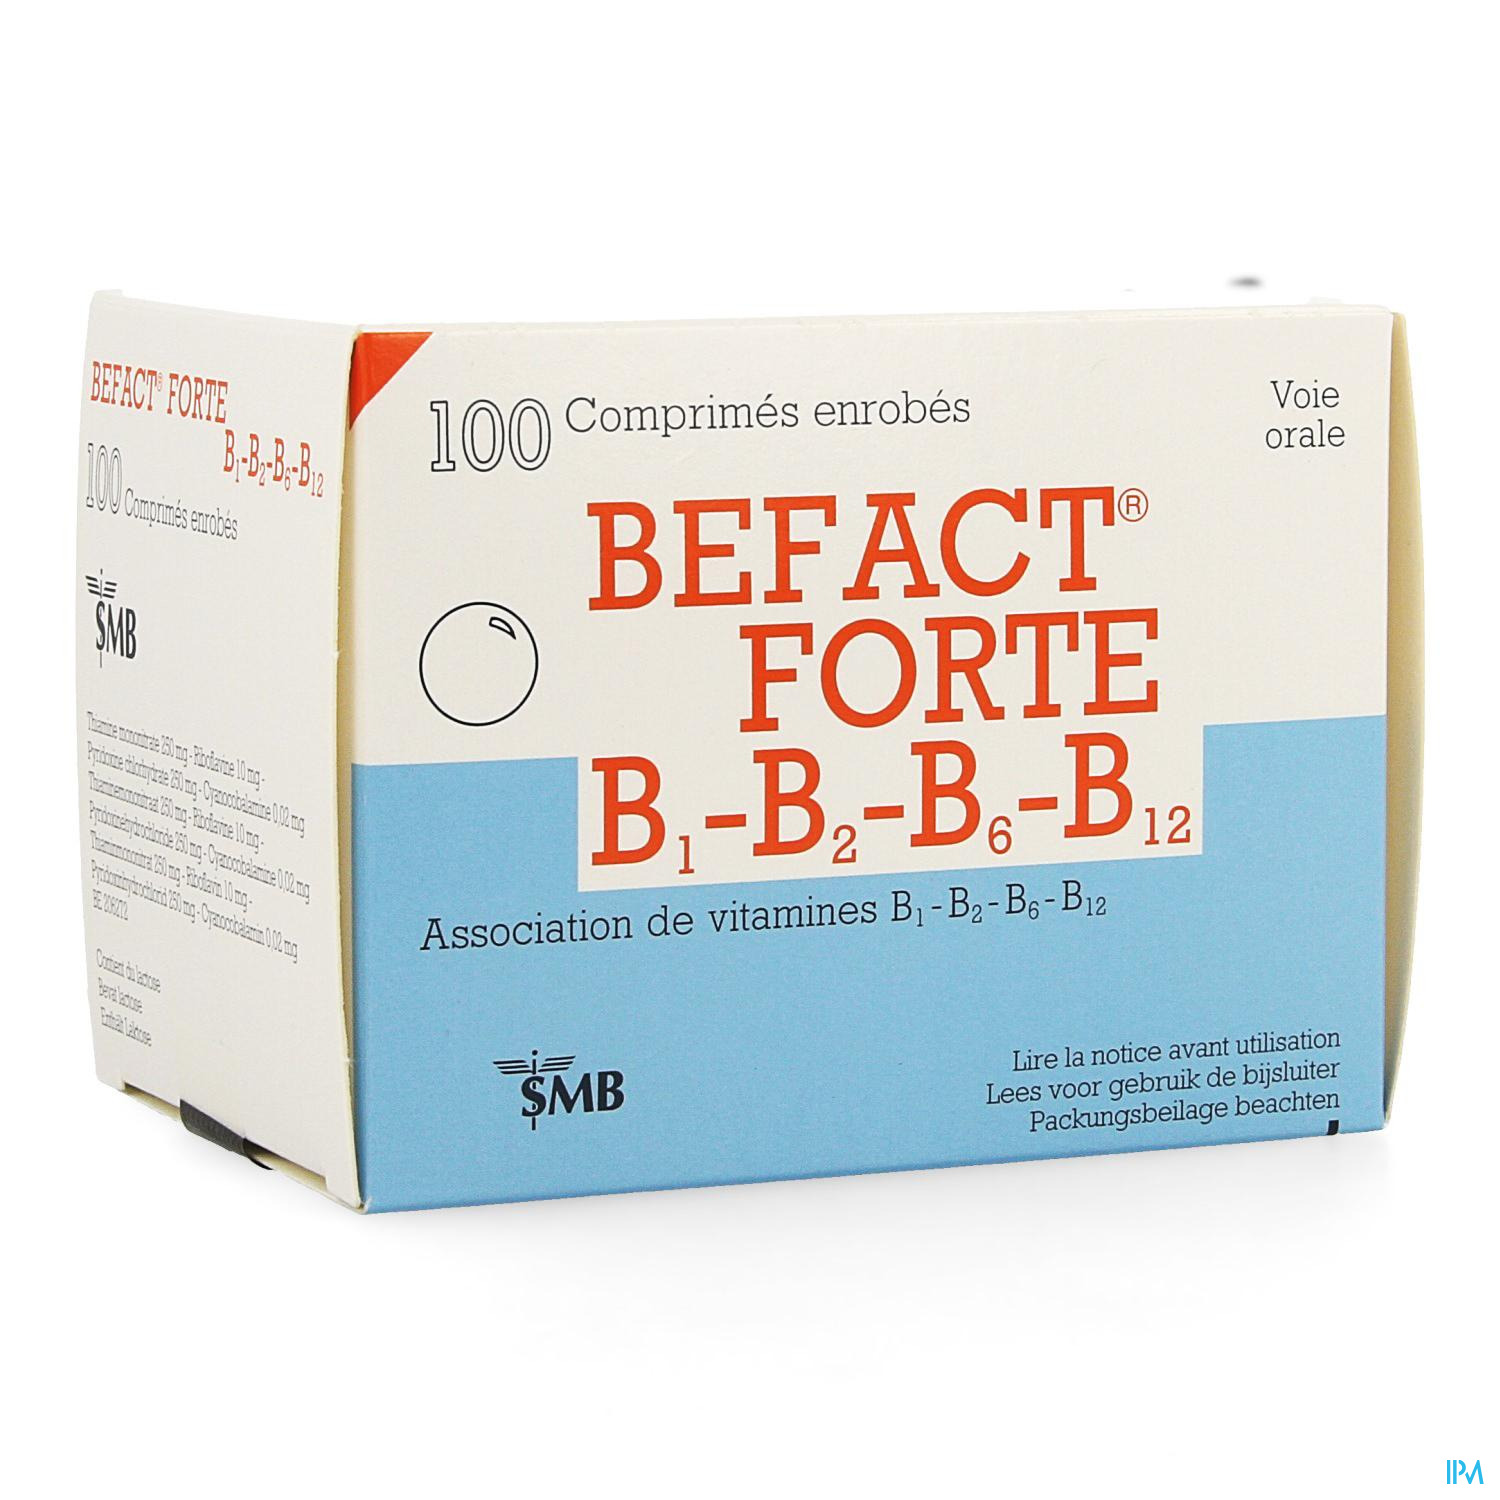 BEFACT FORTE B1 B2 B6 DRG – Online